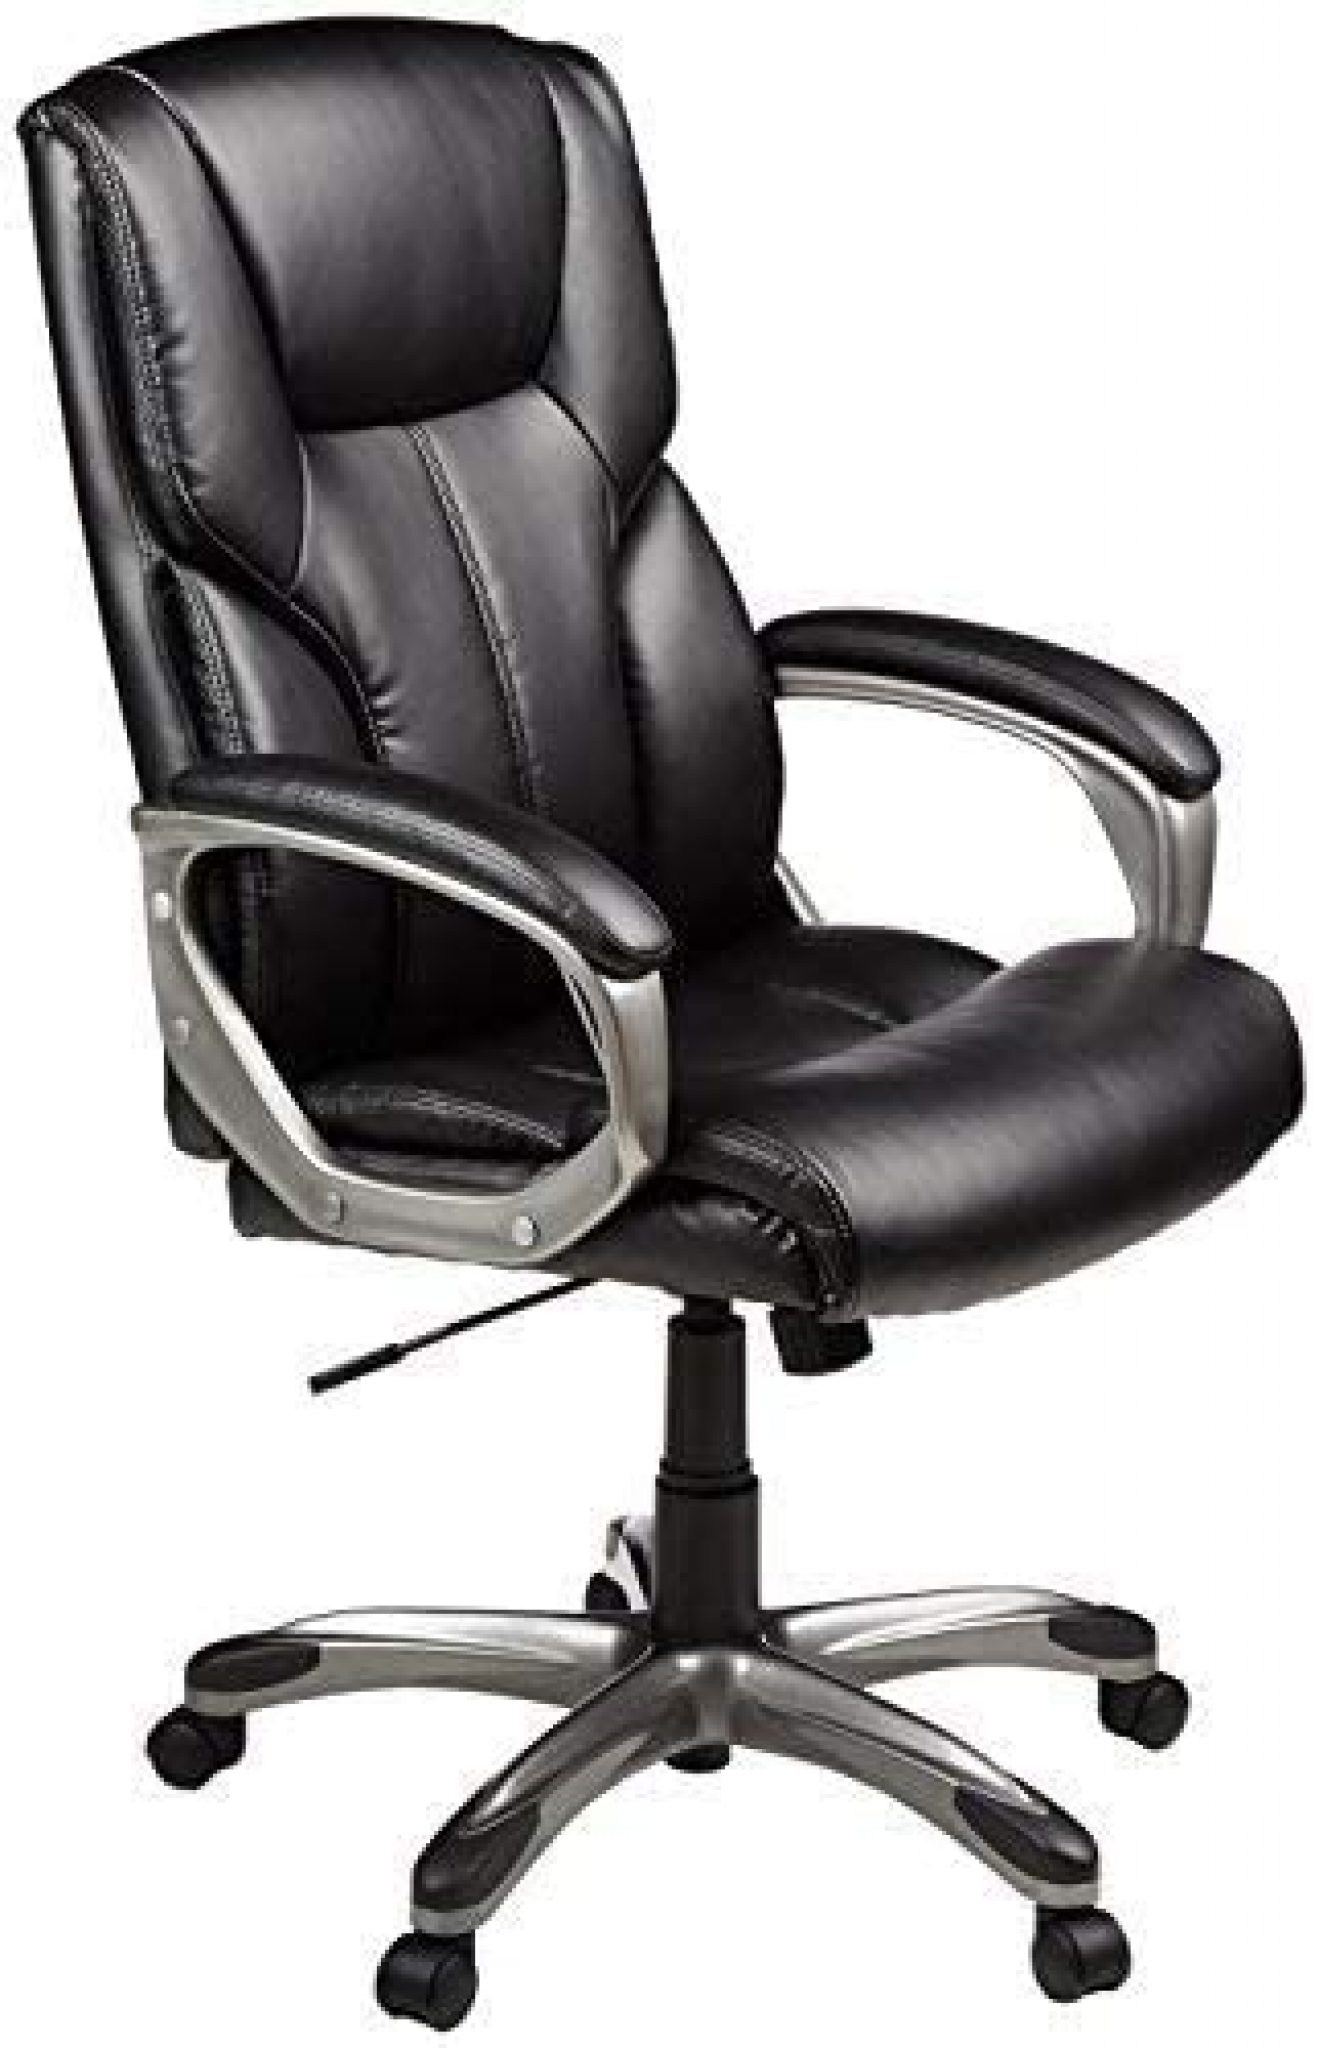 AmazonBasics High Back Leather Executive Adjustable Office Desk Chair 1319x2048 